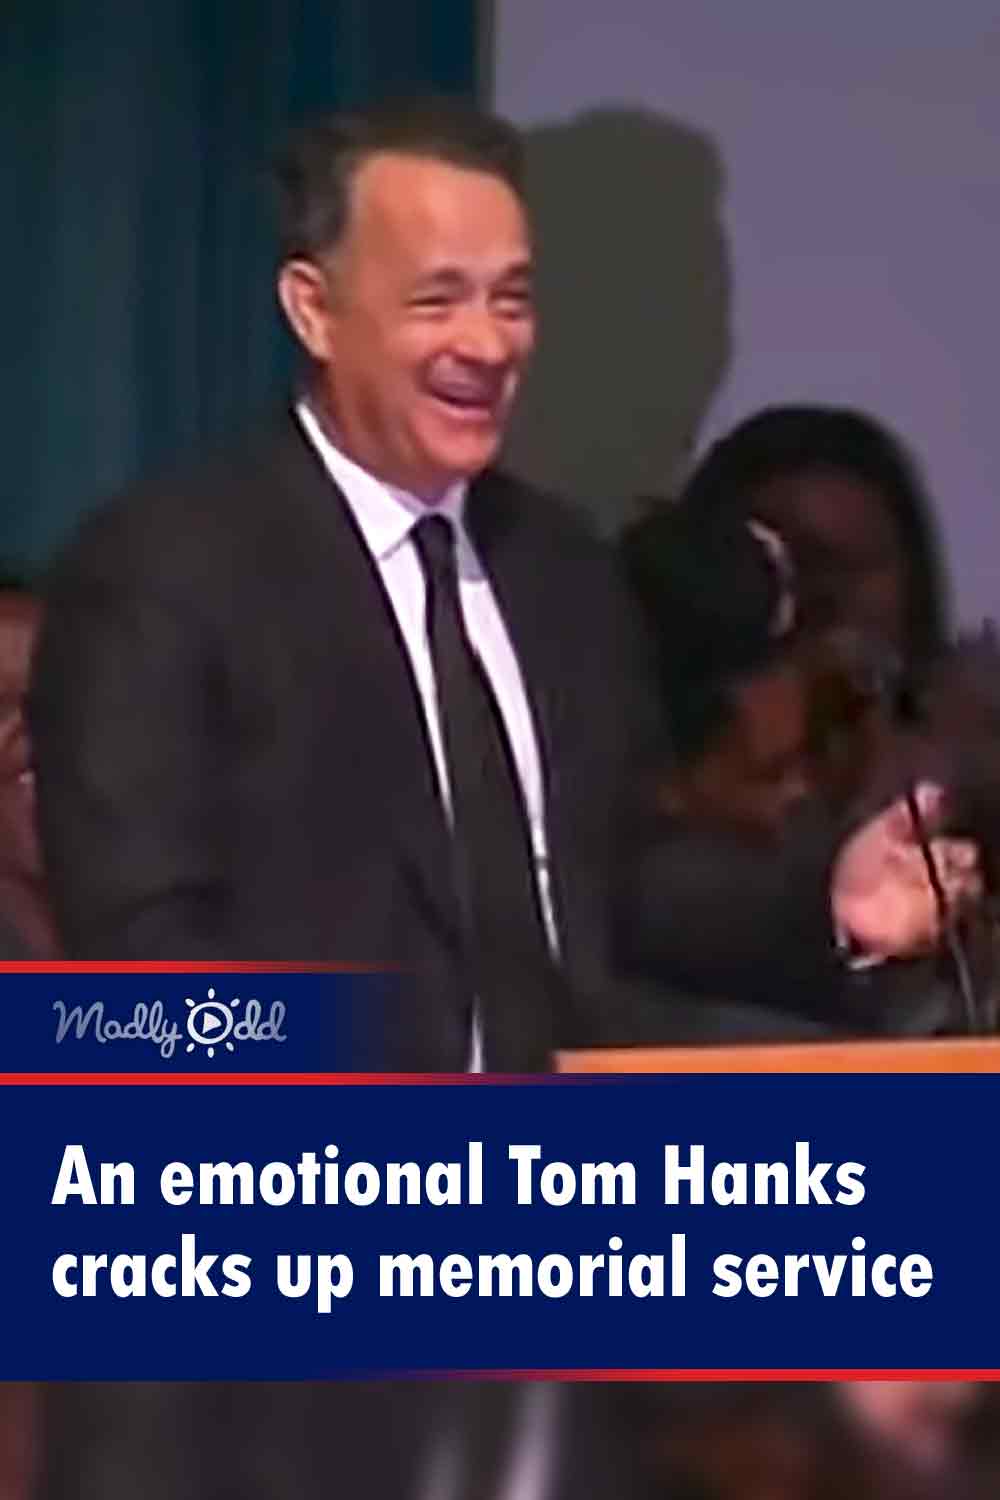 An emotional Tom Hanks cracks up memorial service